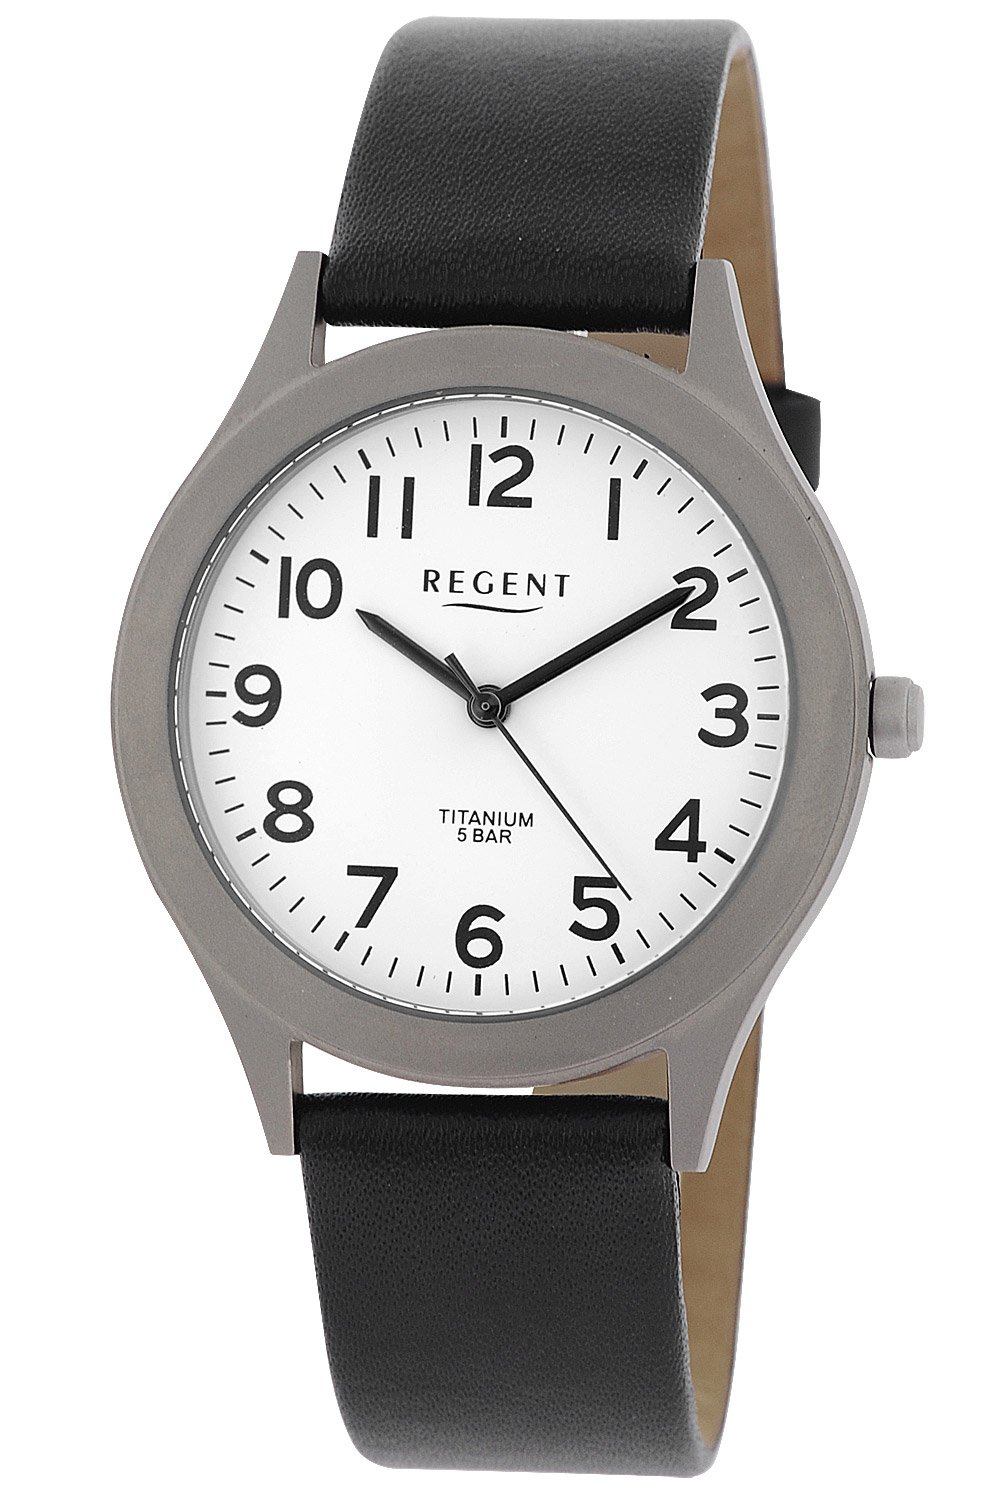 Regent Titanium Men\'s Watch with Leather Strap F-842 • uhrcenter